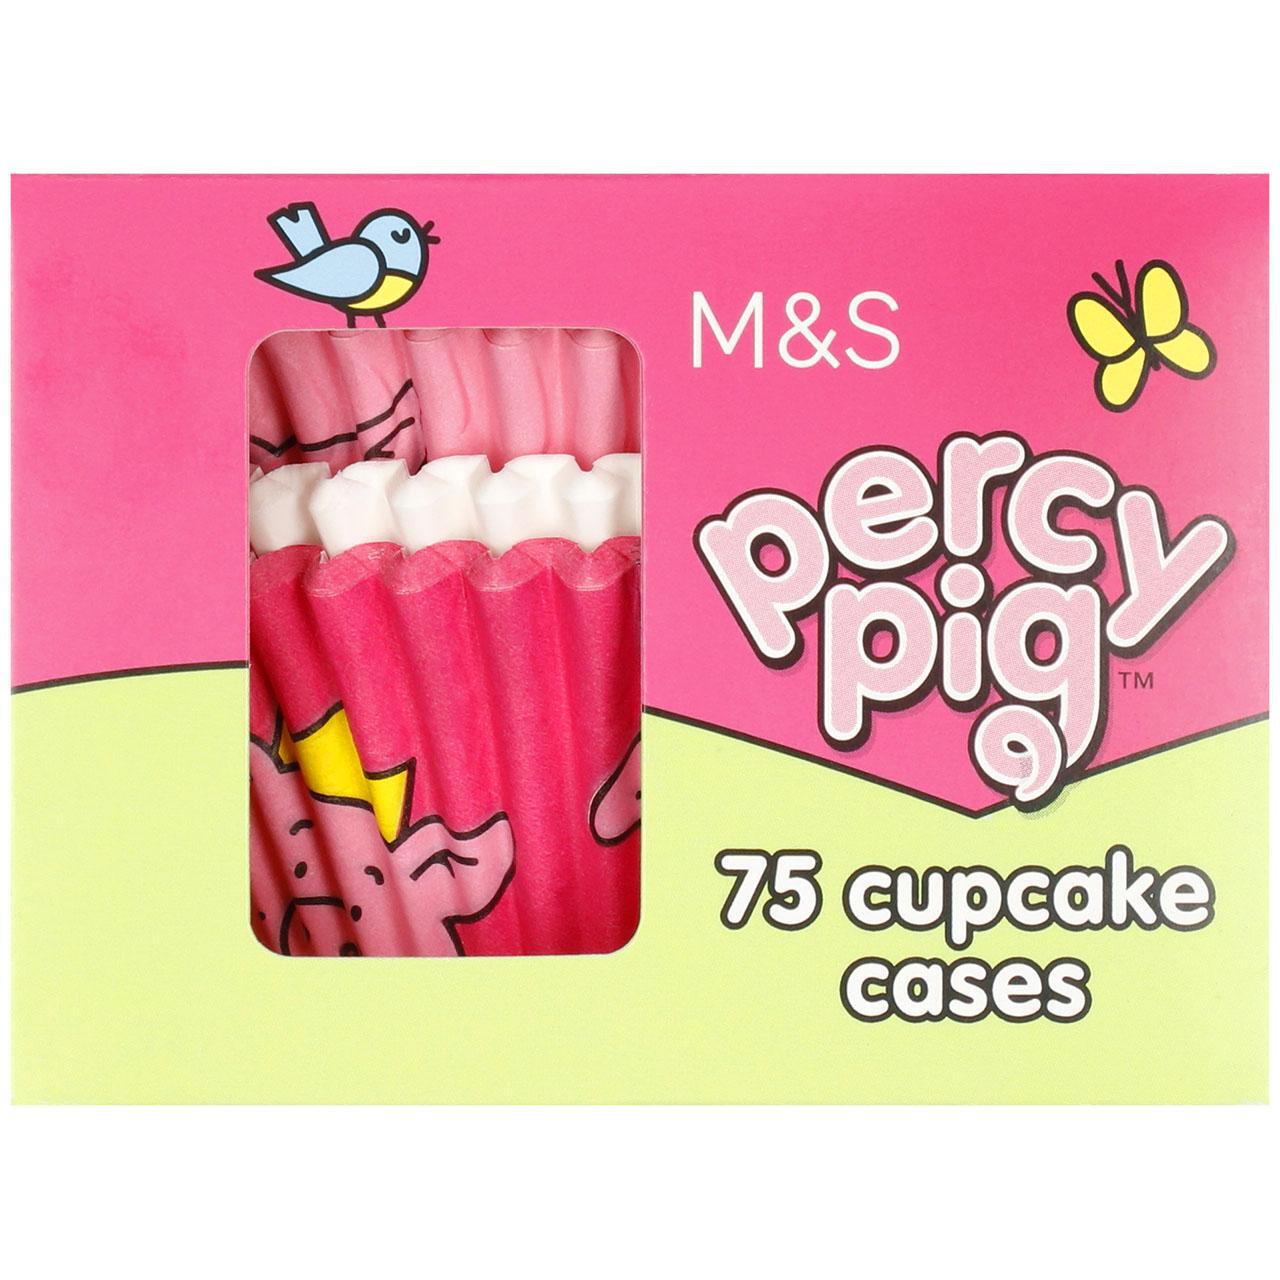 M&S 75 Percy Pig Cupcake Cases 75 per pack